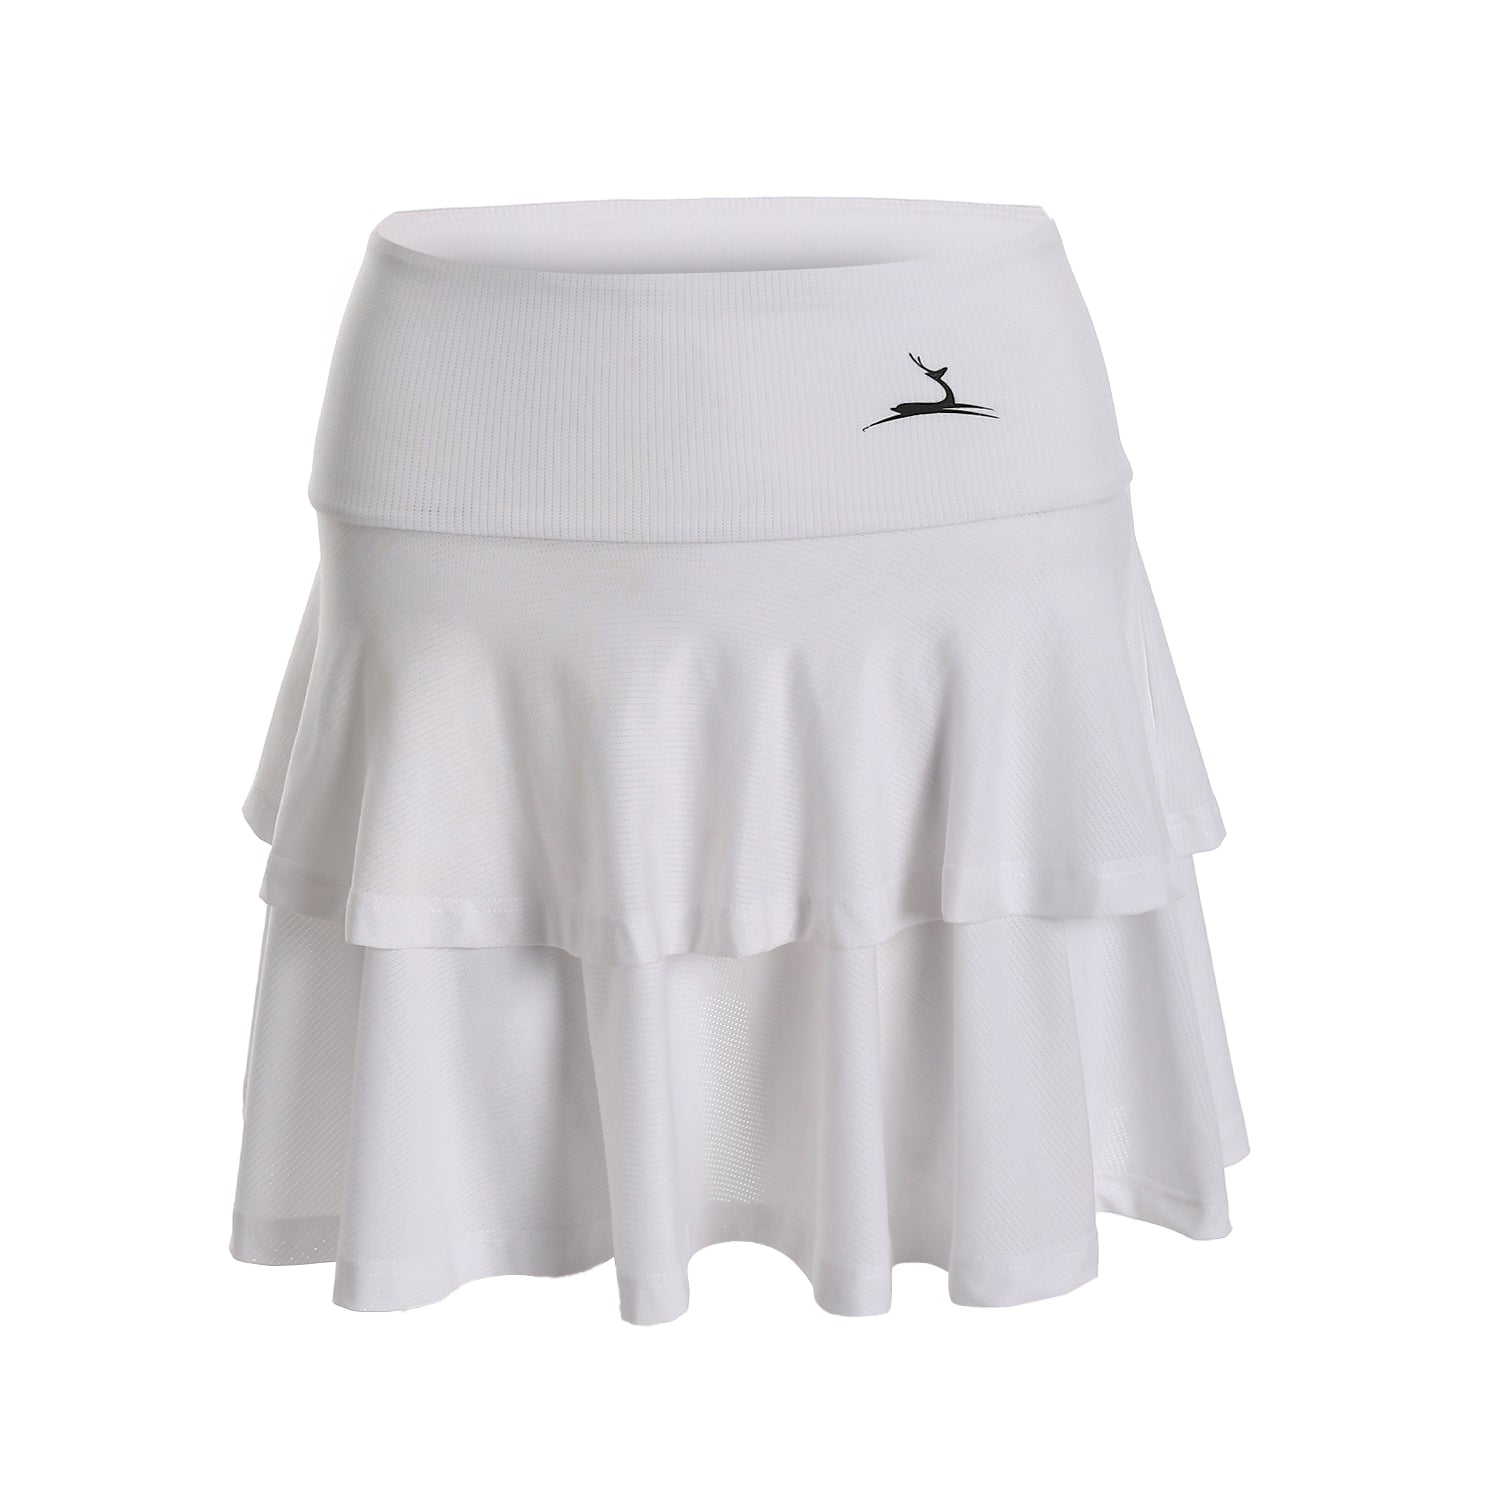 Doe double ruffles sports skirt